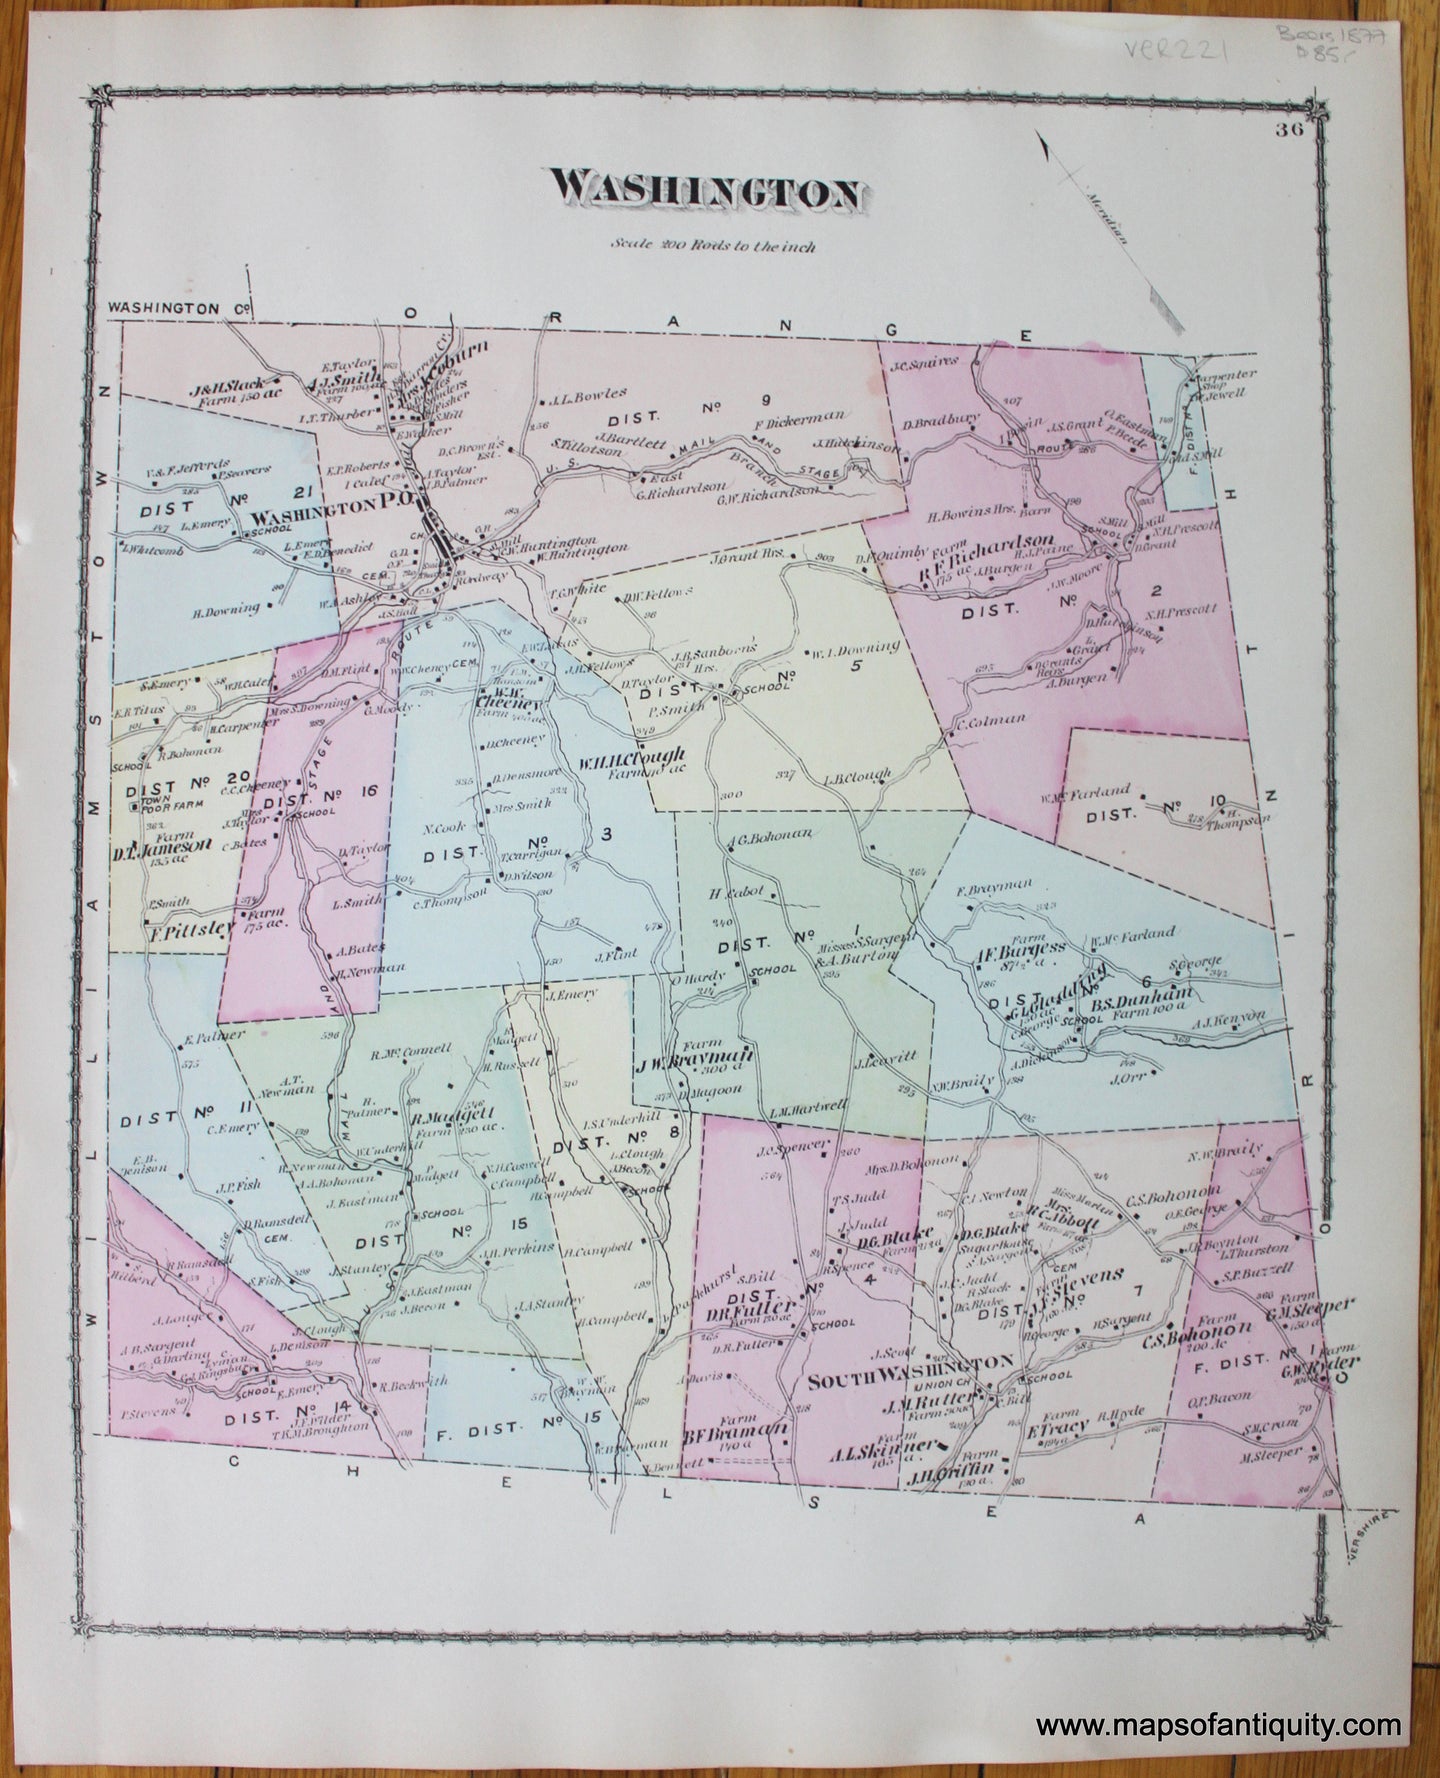 Washington-1877-Beers-Antique-Map-Vermont-Orange-County-1870s-1800s-19th-century-Maps-of-Antiquity